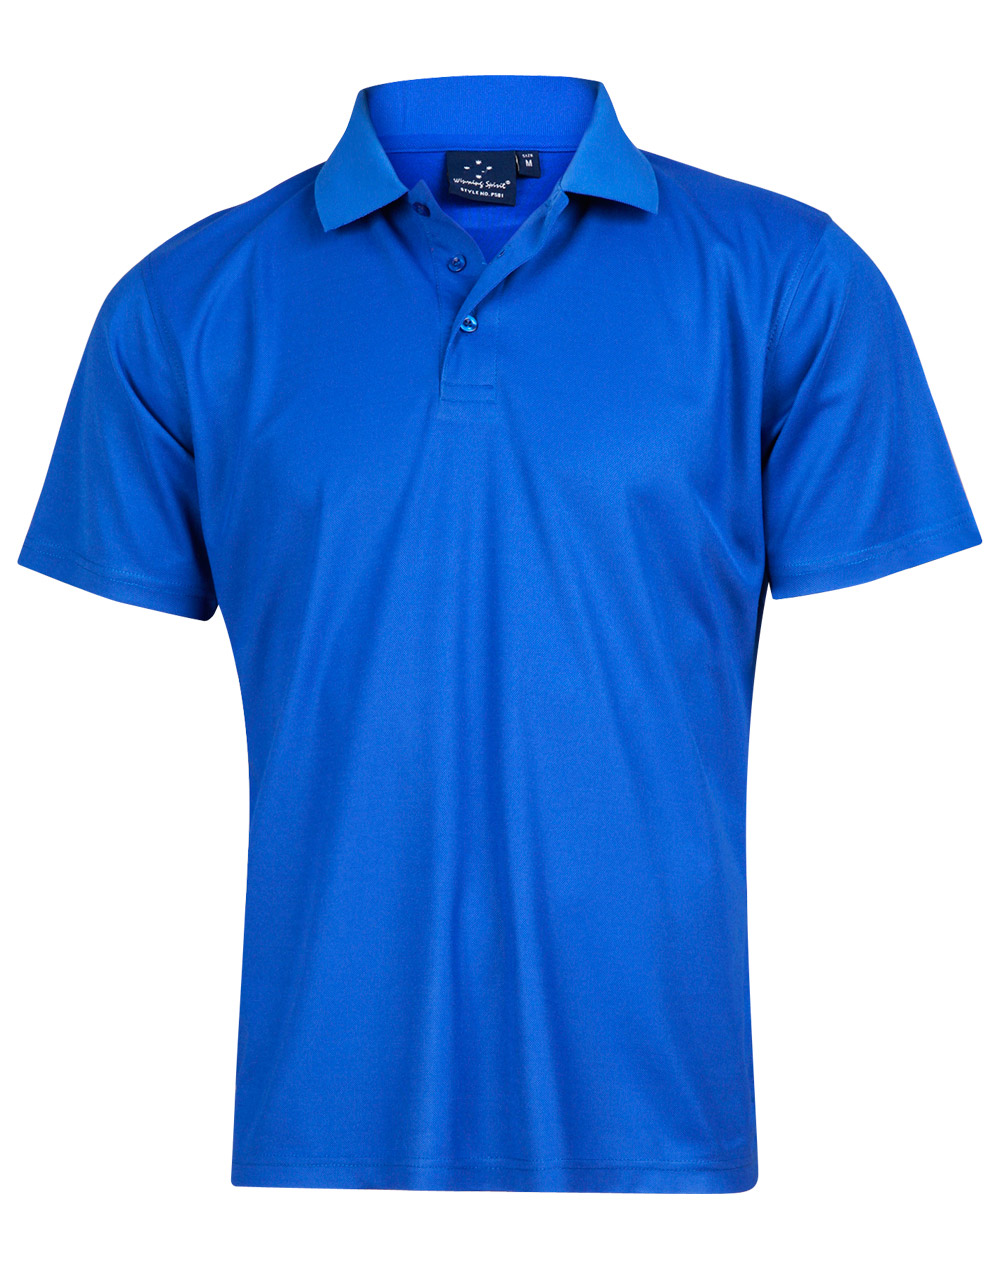 Verve Polo | Uniform Super Store | Purchase Polo Shirts with Uniform ...